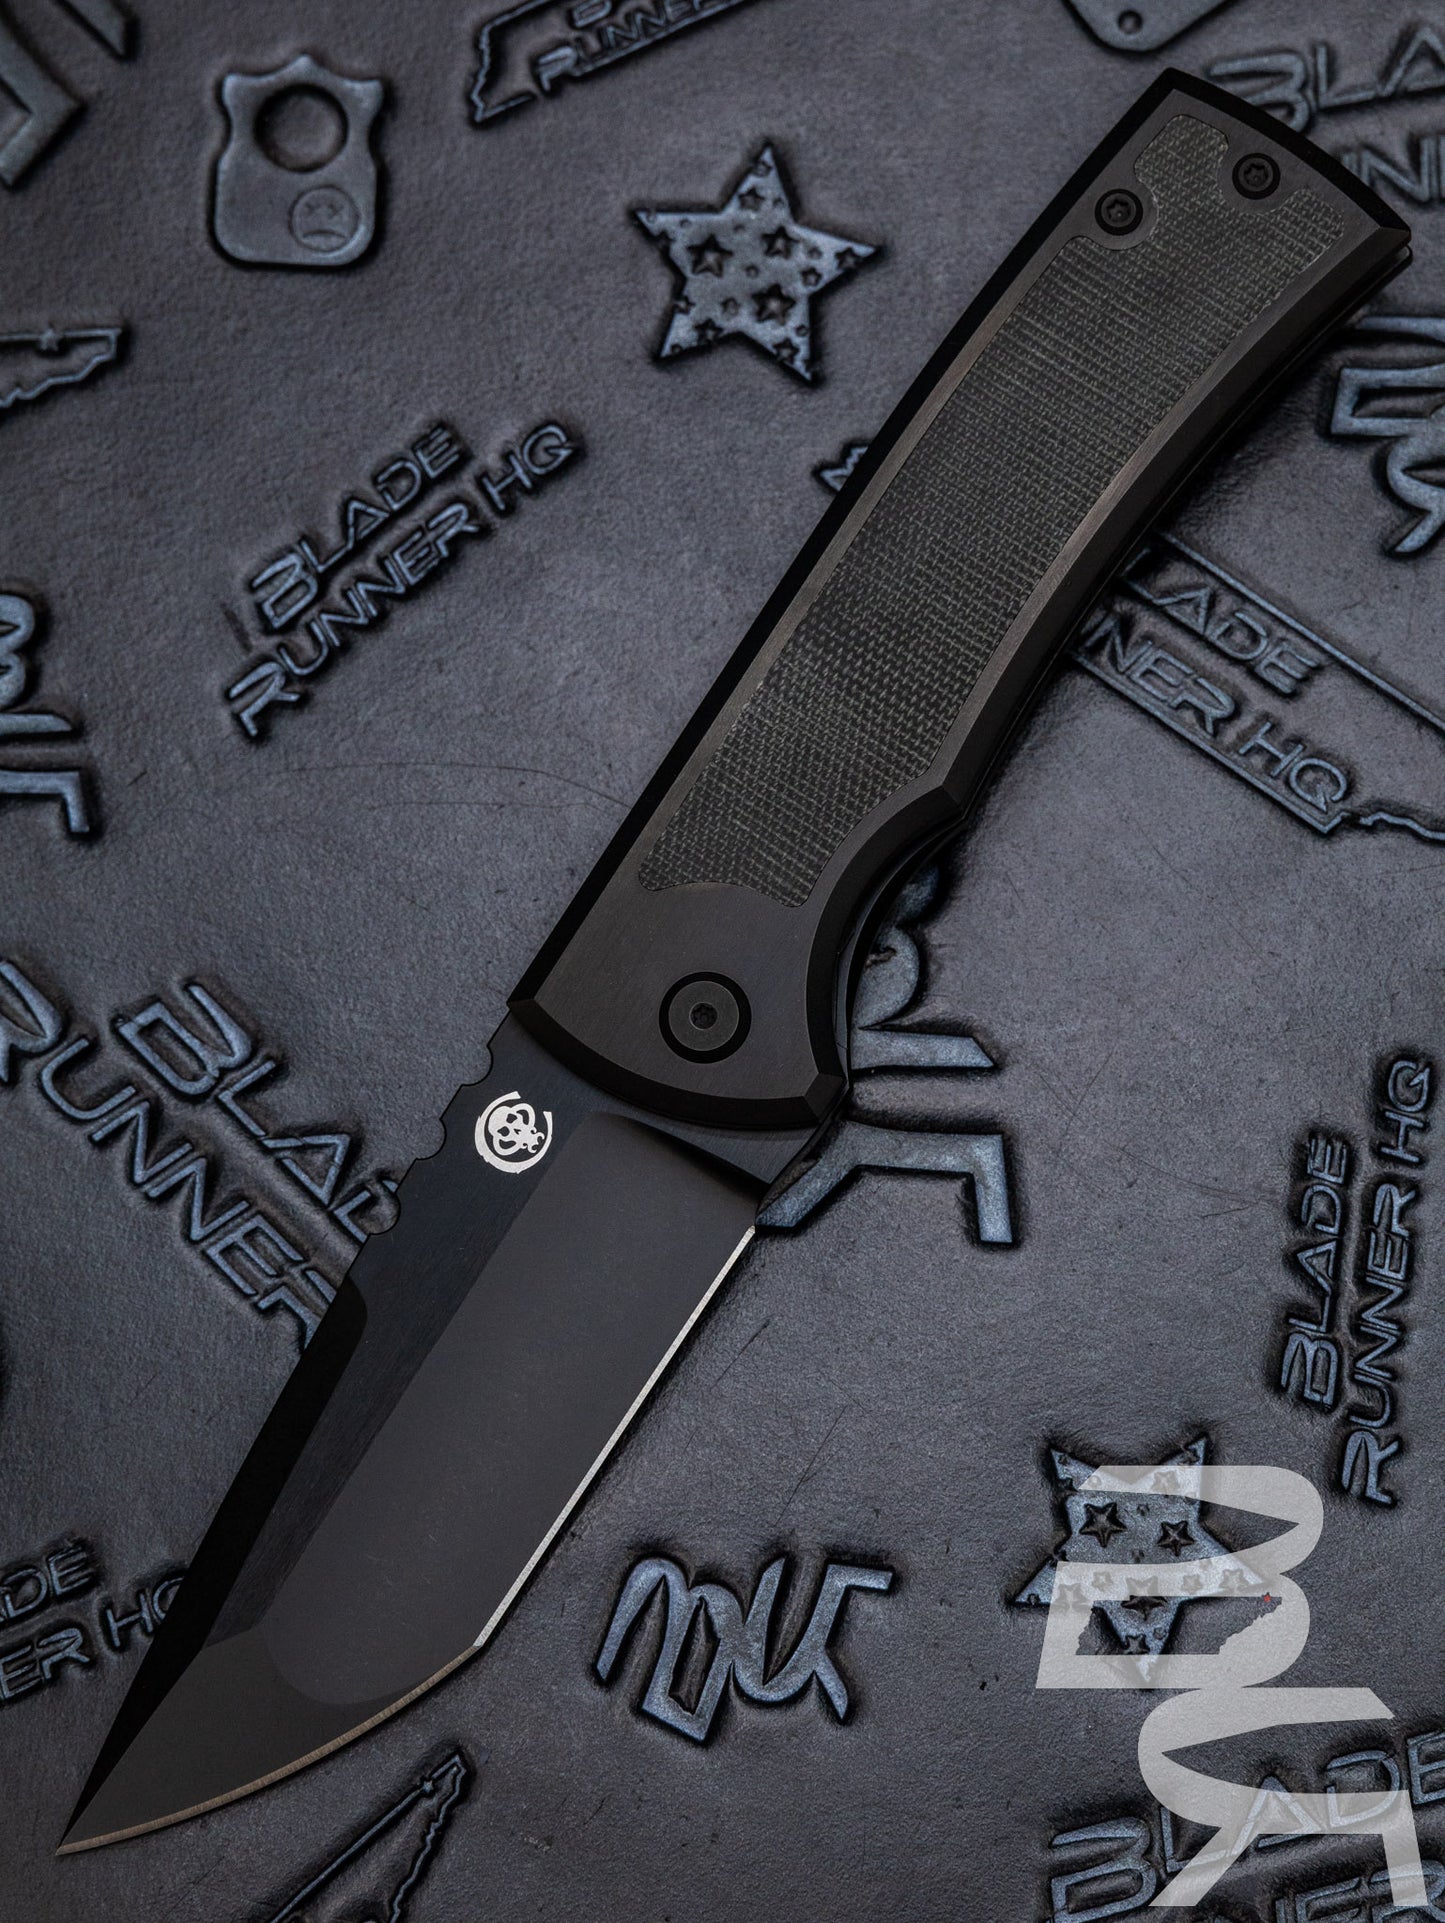 Chaves Ultramar Redencion 229 KickStop Flipper Knife 3.625" M390 Black Compound Tanto Blade, Black Titanium Handles with Black Micarta Inlay, Frame Lock